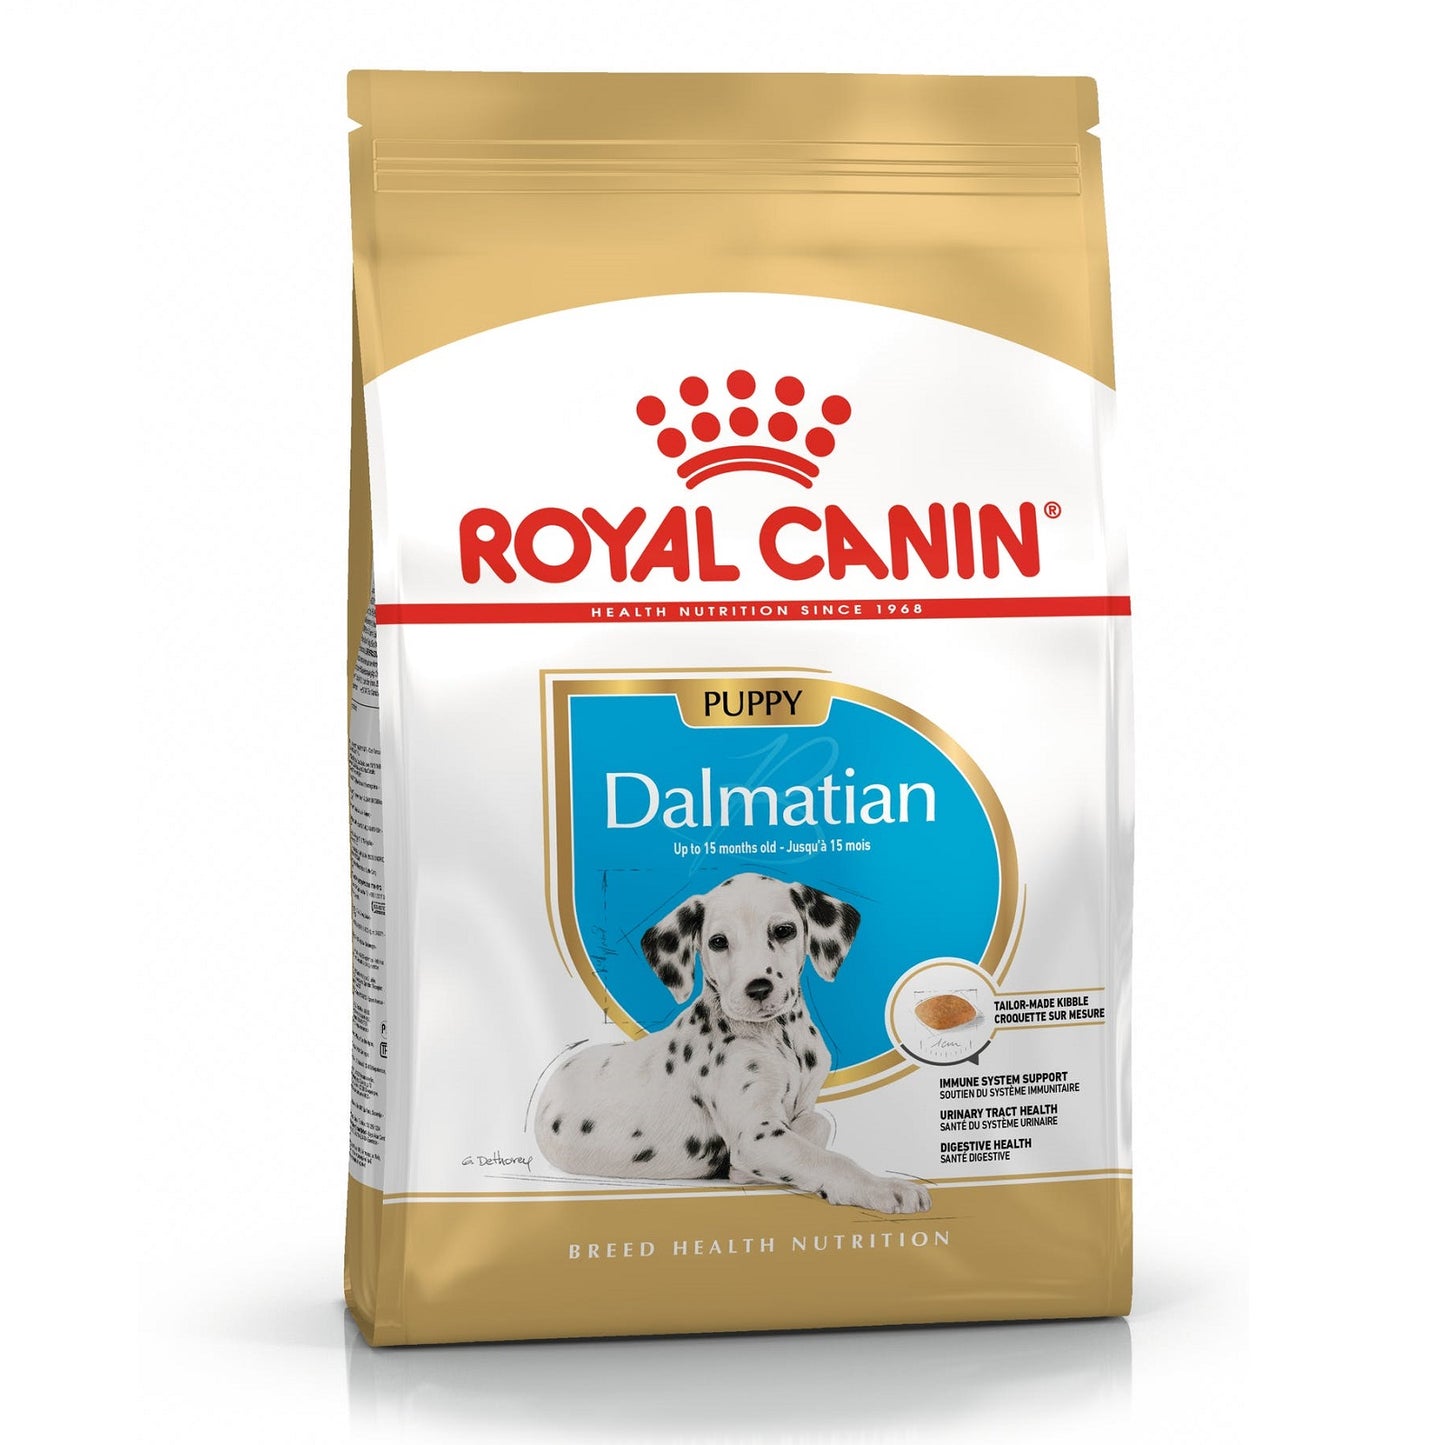 ROYAL CANIN - Dalmatian Puppy (12kg)